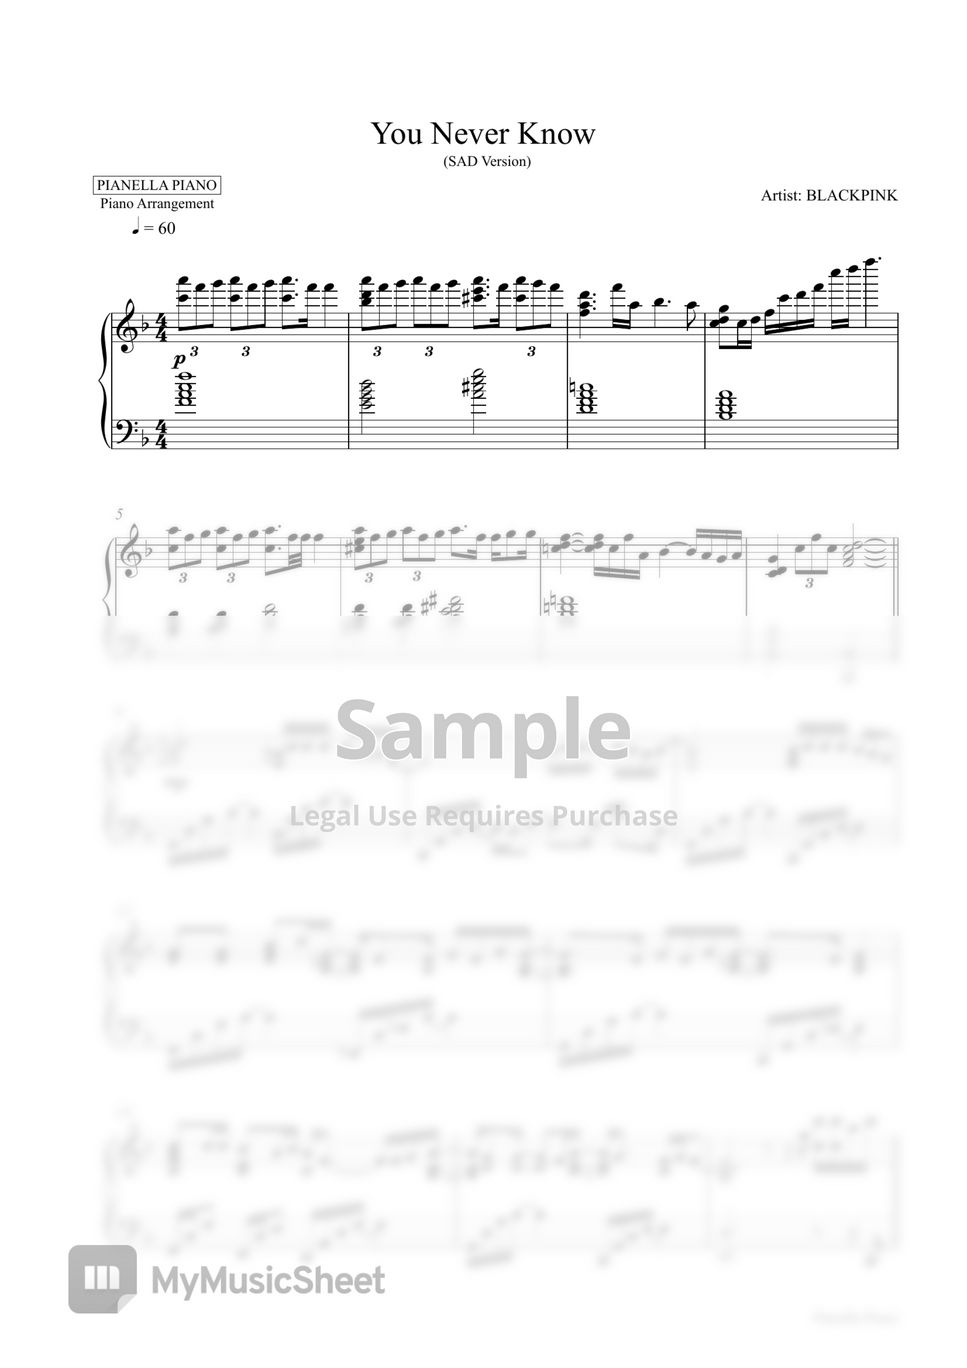 BLACKPINK - You Never Know (Sad Piano Sheet) by Pianella Piano